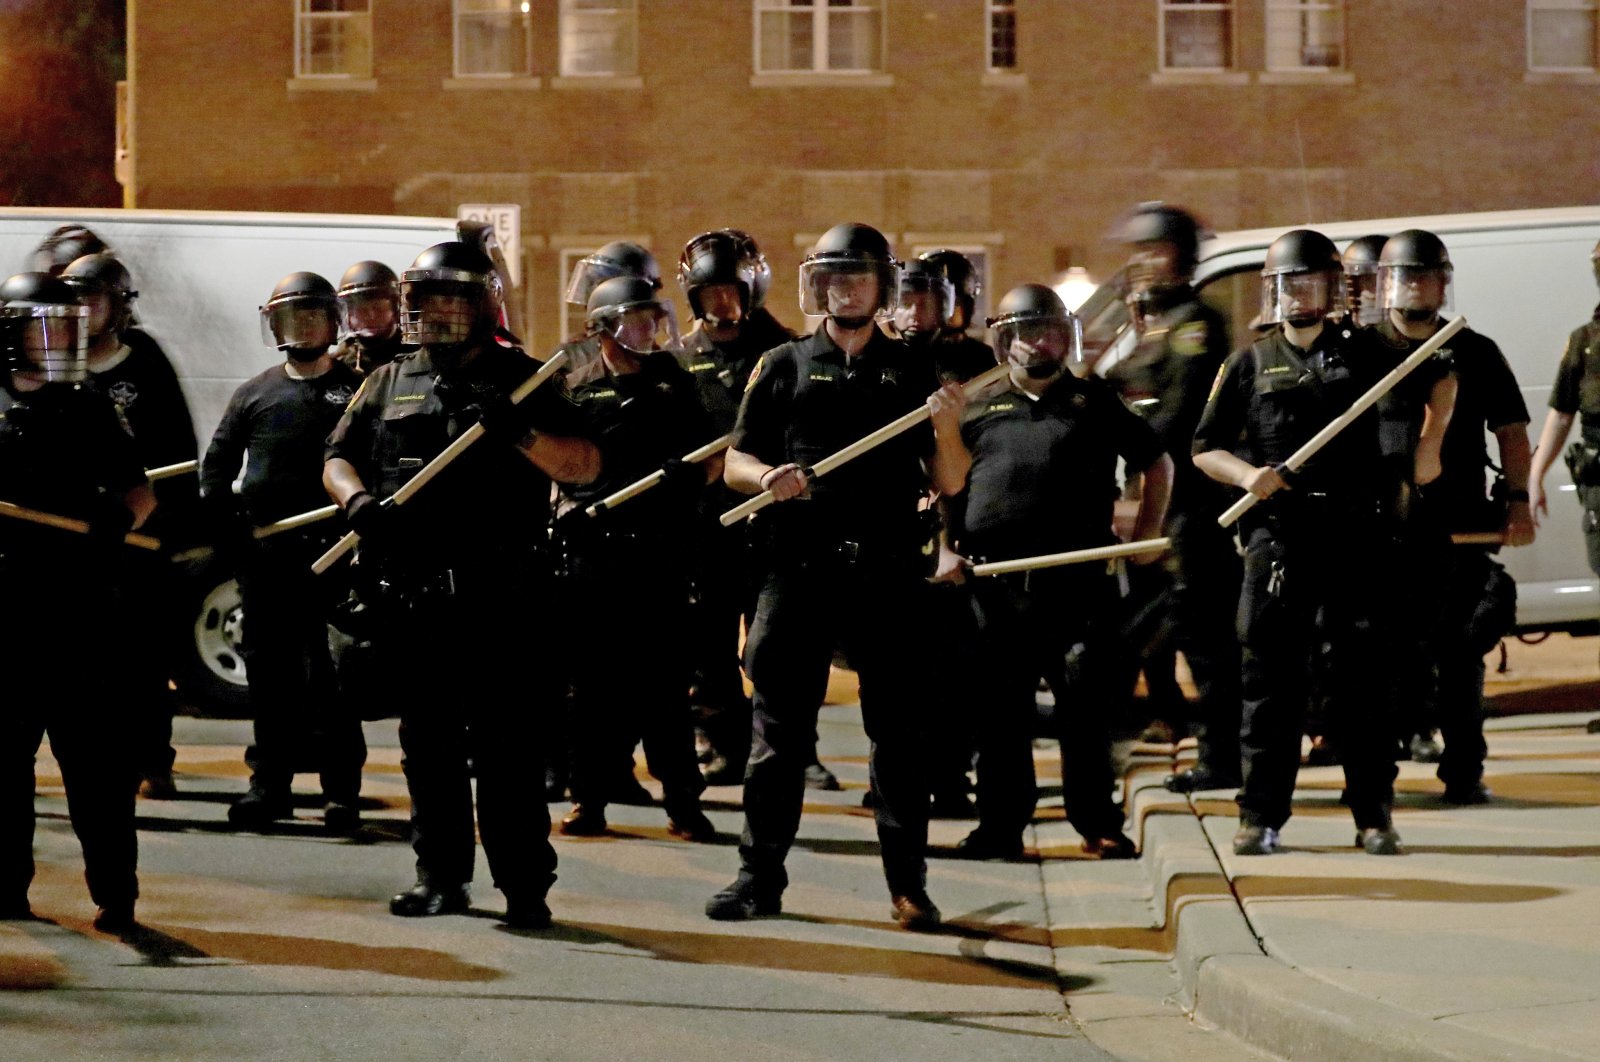 Police in riot gear stand guard in Kenosha, Wisconsin, U.S., Aug. 23, 2020. (Milwaukee Journal-Sentinel via AP)